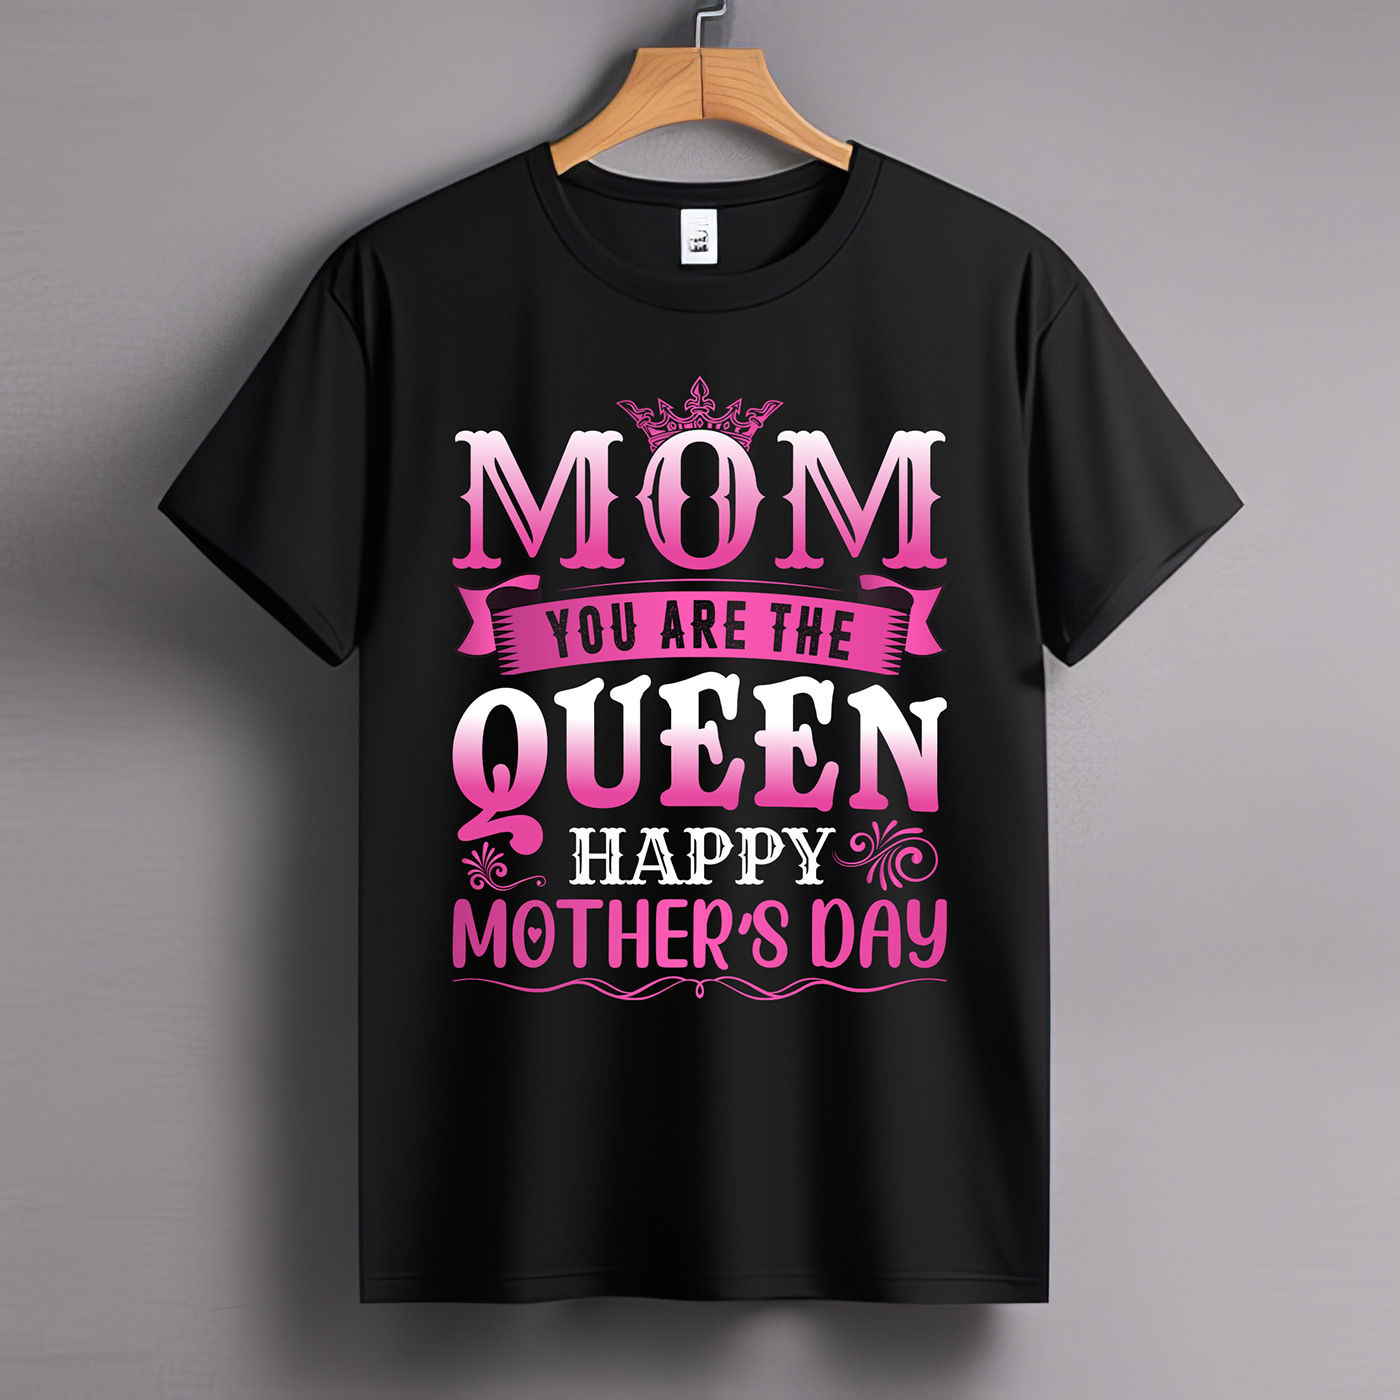 Mothers Day T-Shirt mothers day t shirt design t-shirt Typography t-shirt design t-shirts t-shirt illustration Tshirt Design MOM t-shirt mother t shirt design